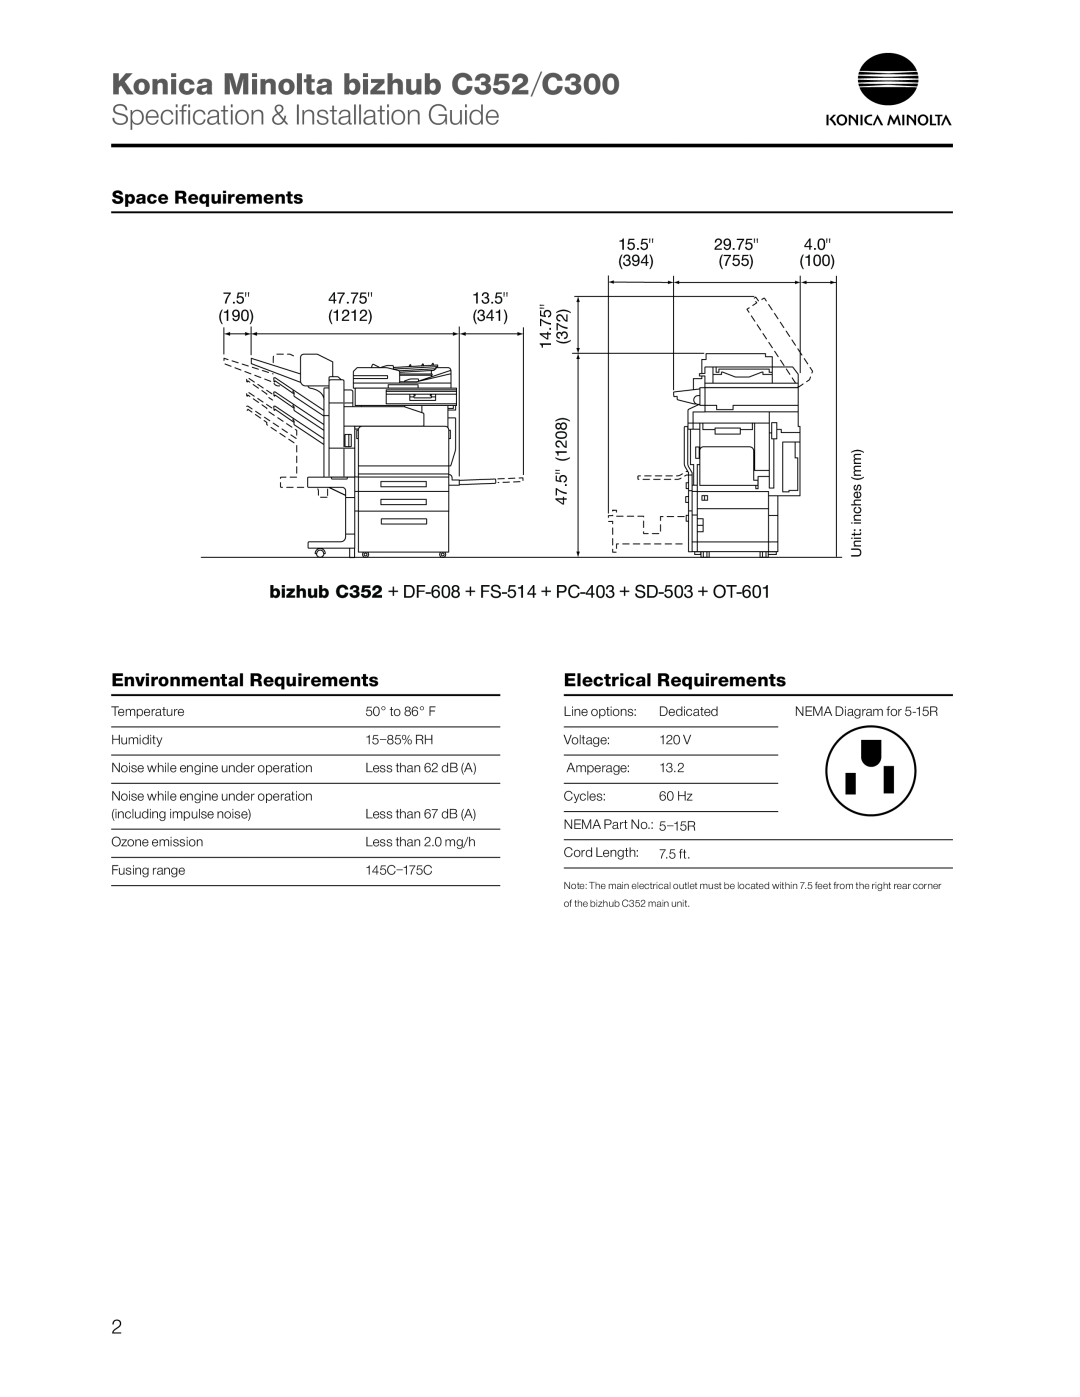 Konica Minolta dimensions Konica Minolta bizhub C352 C300, Specification & Installation Guide, Space Requirements 